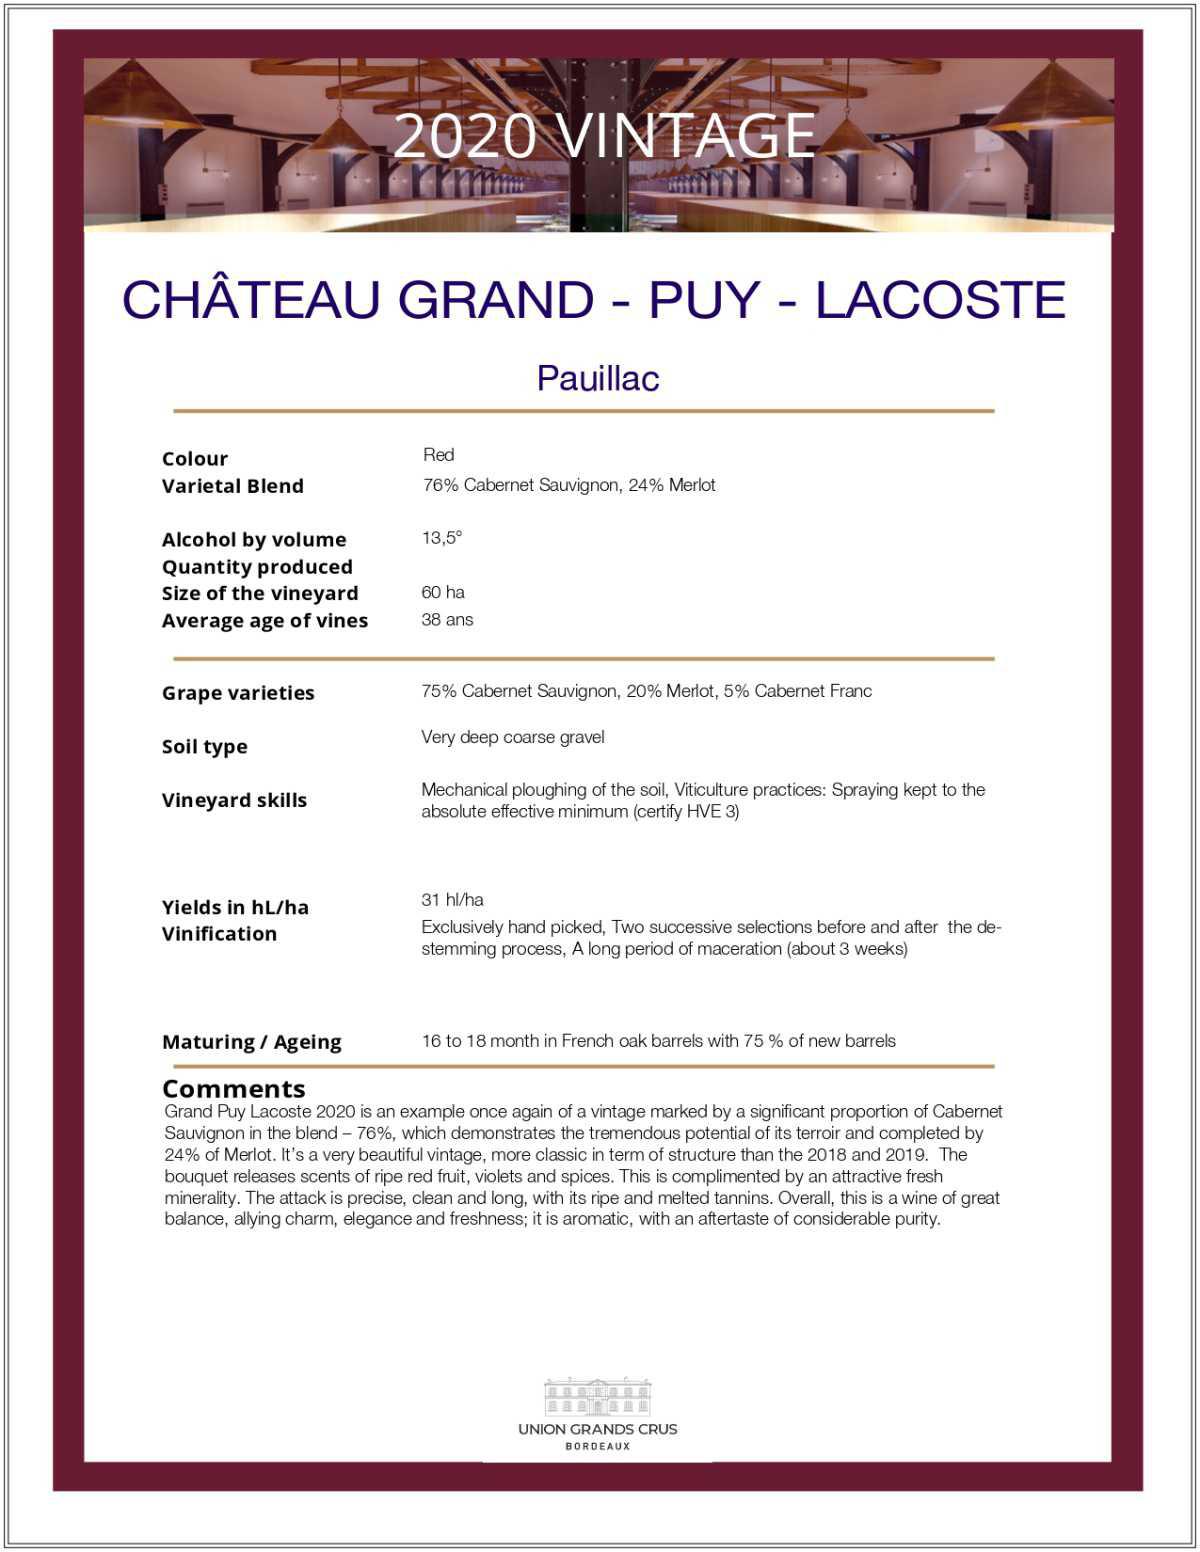 Château Grand - Puy - Lacoste